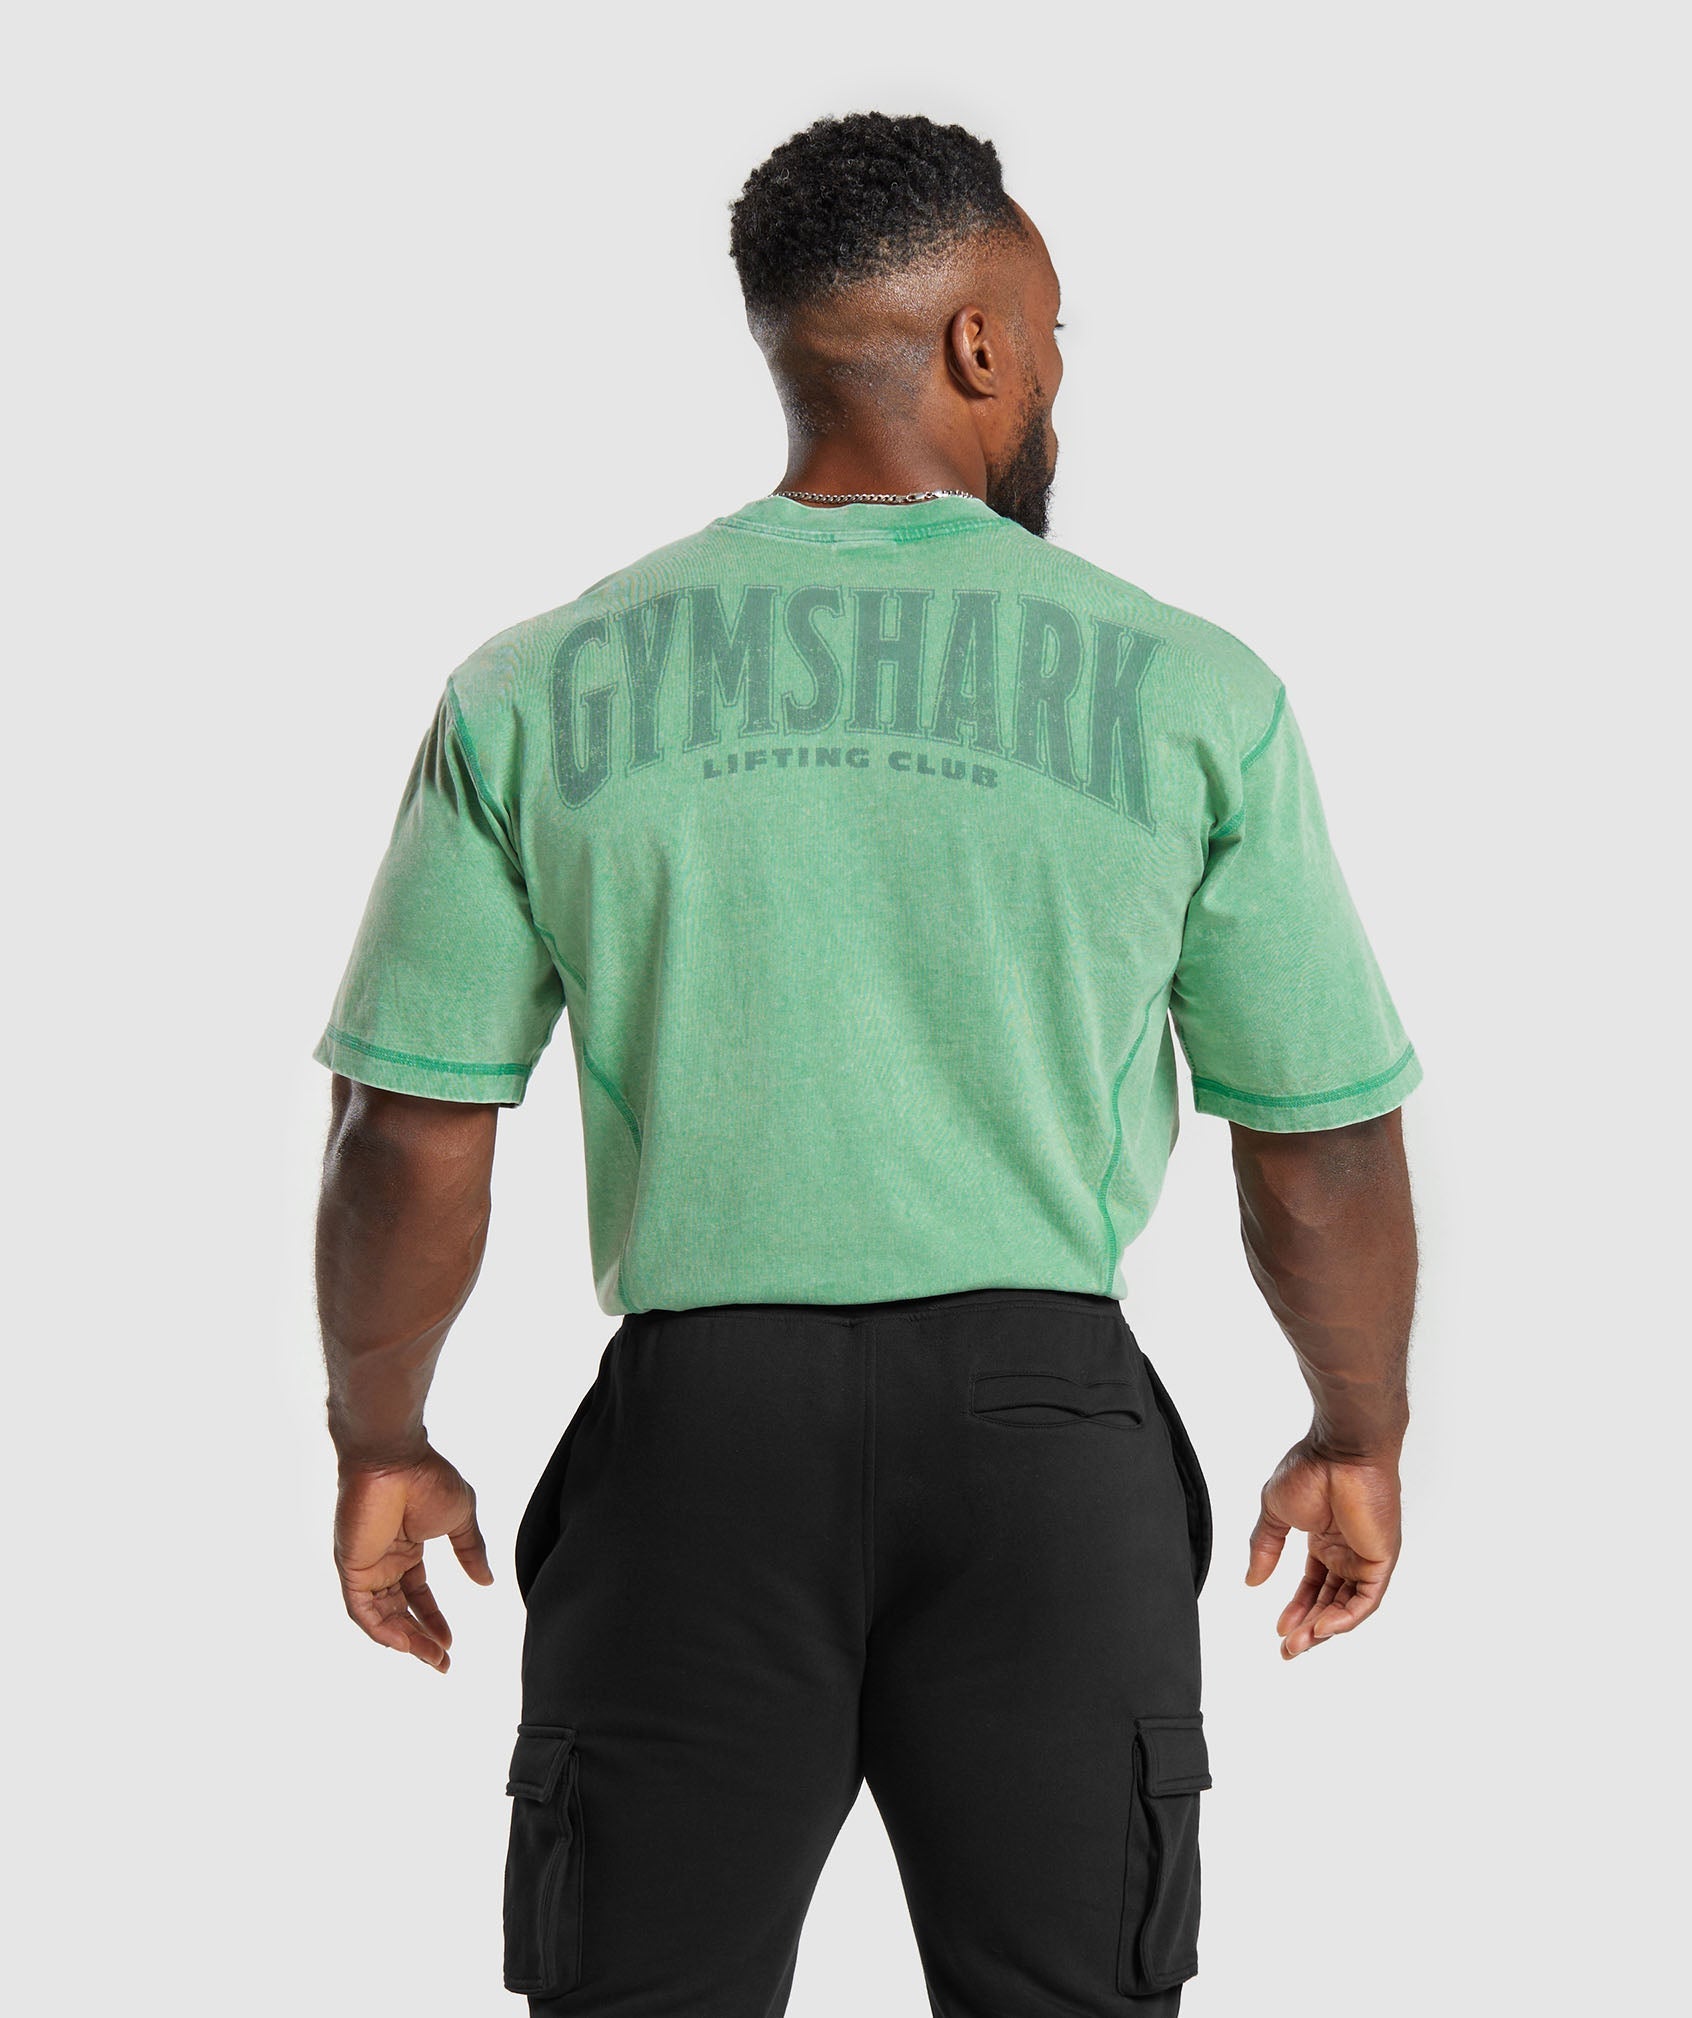 Men's Gym Tank Tops - Gymshark